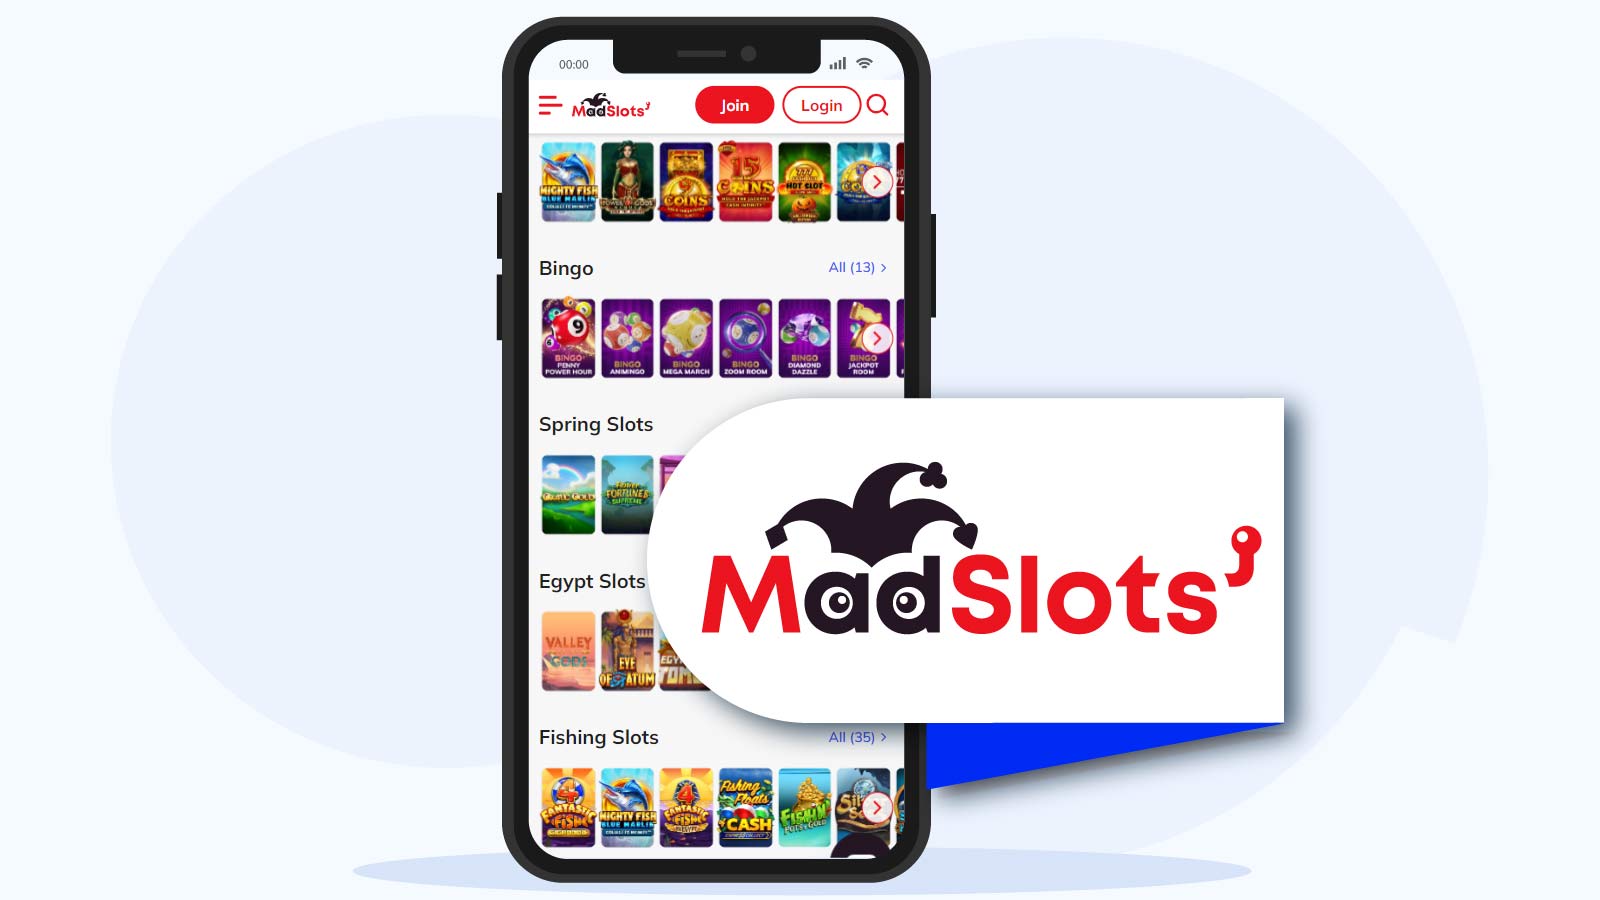 100 Free Spins Mobile Verification at Madslots Casino